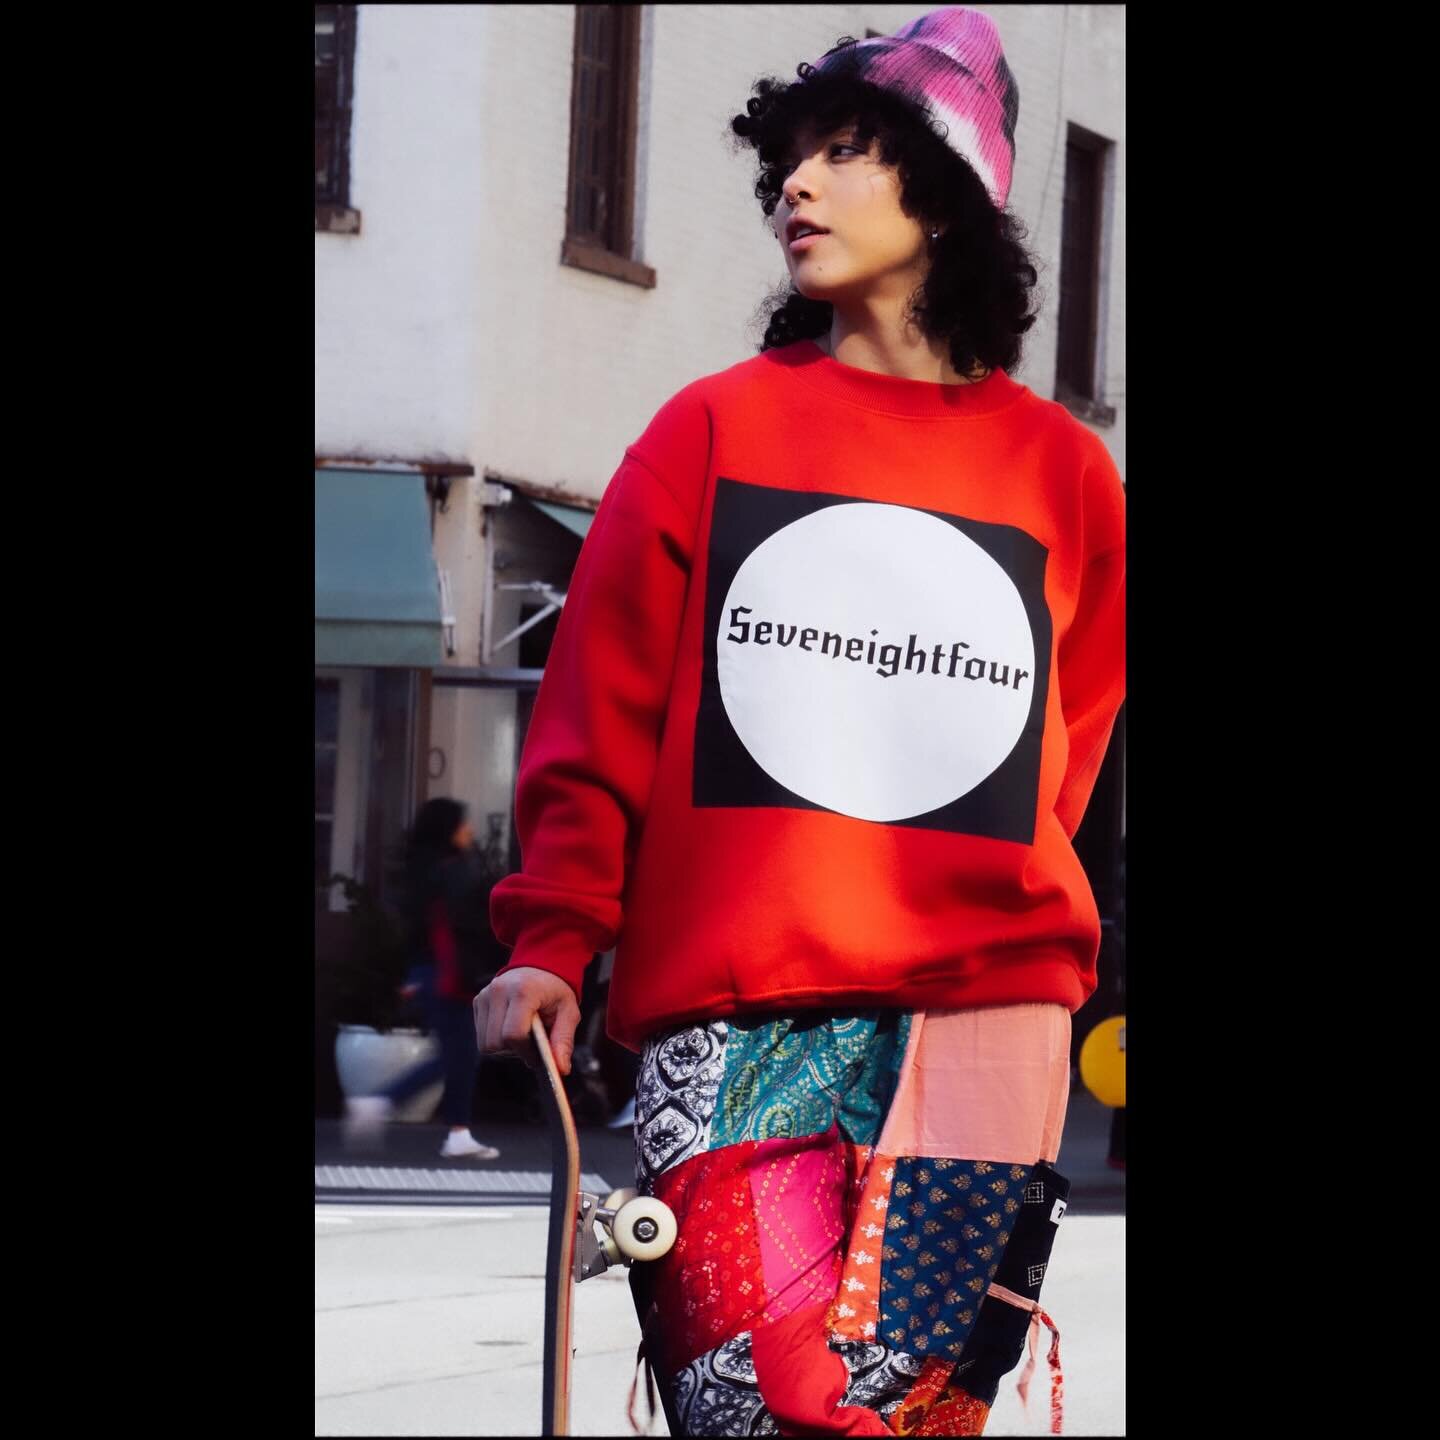 SEVENEIGHTFOUR&trade;️ Patchwork Pants | Tye Dye Beanies | Brooklynite sweater ✨

📸 @nyahs.pov  @london.jolie_ 

#brand #clothingaccessories #784 #shop784 #vincy #kingstown #nyc #business #buyblack